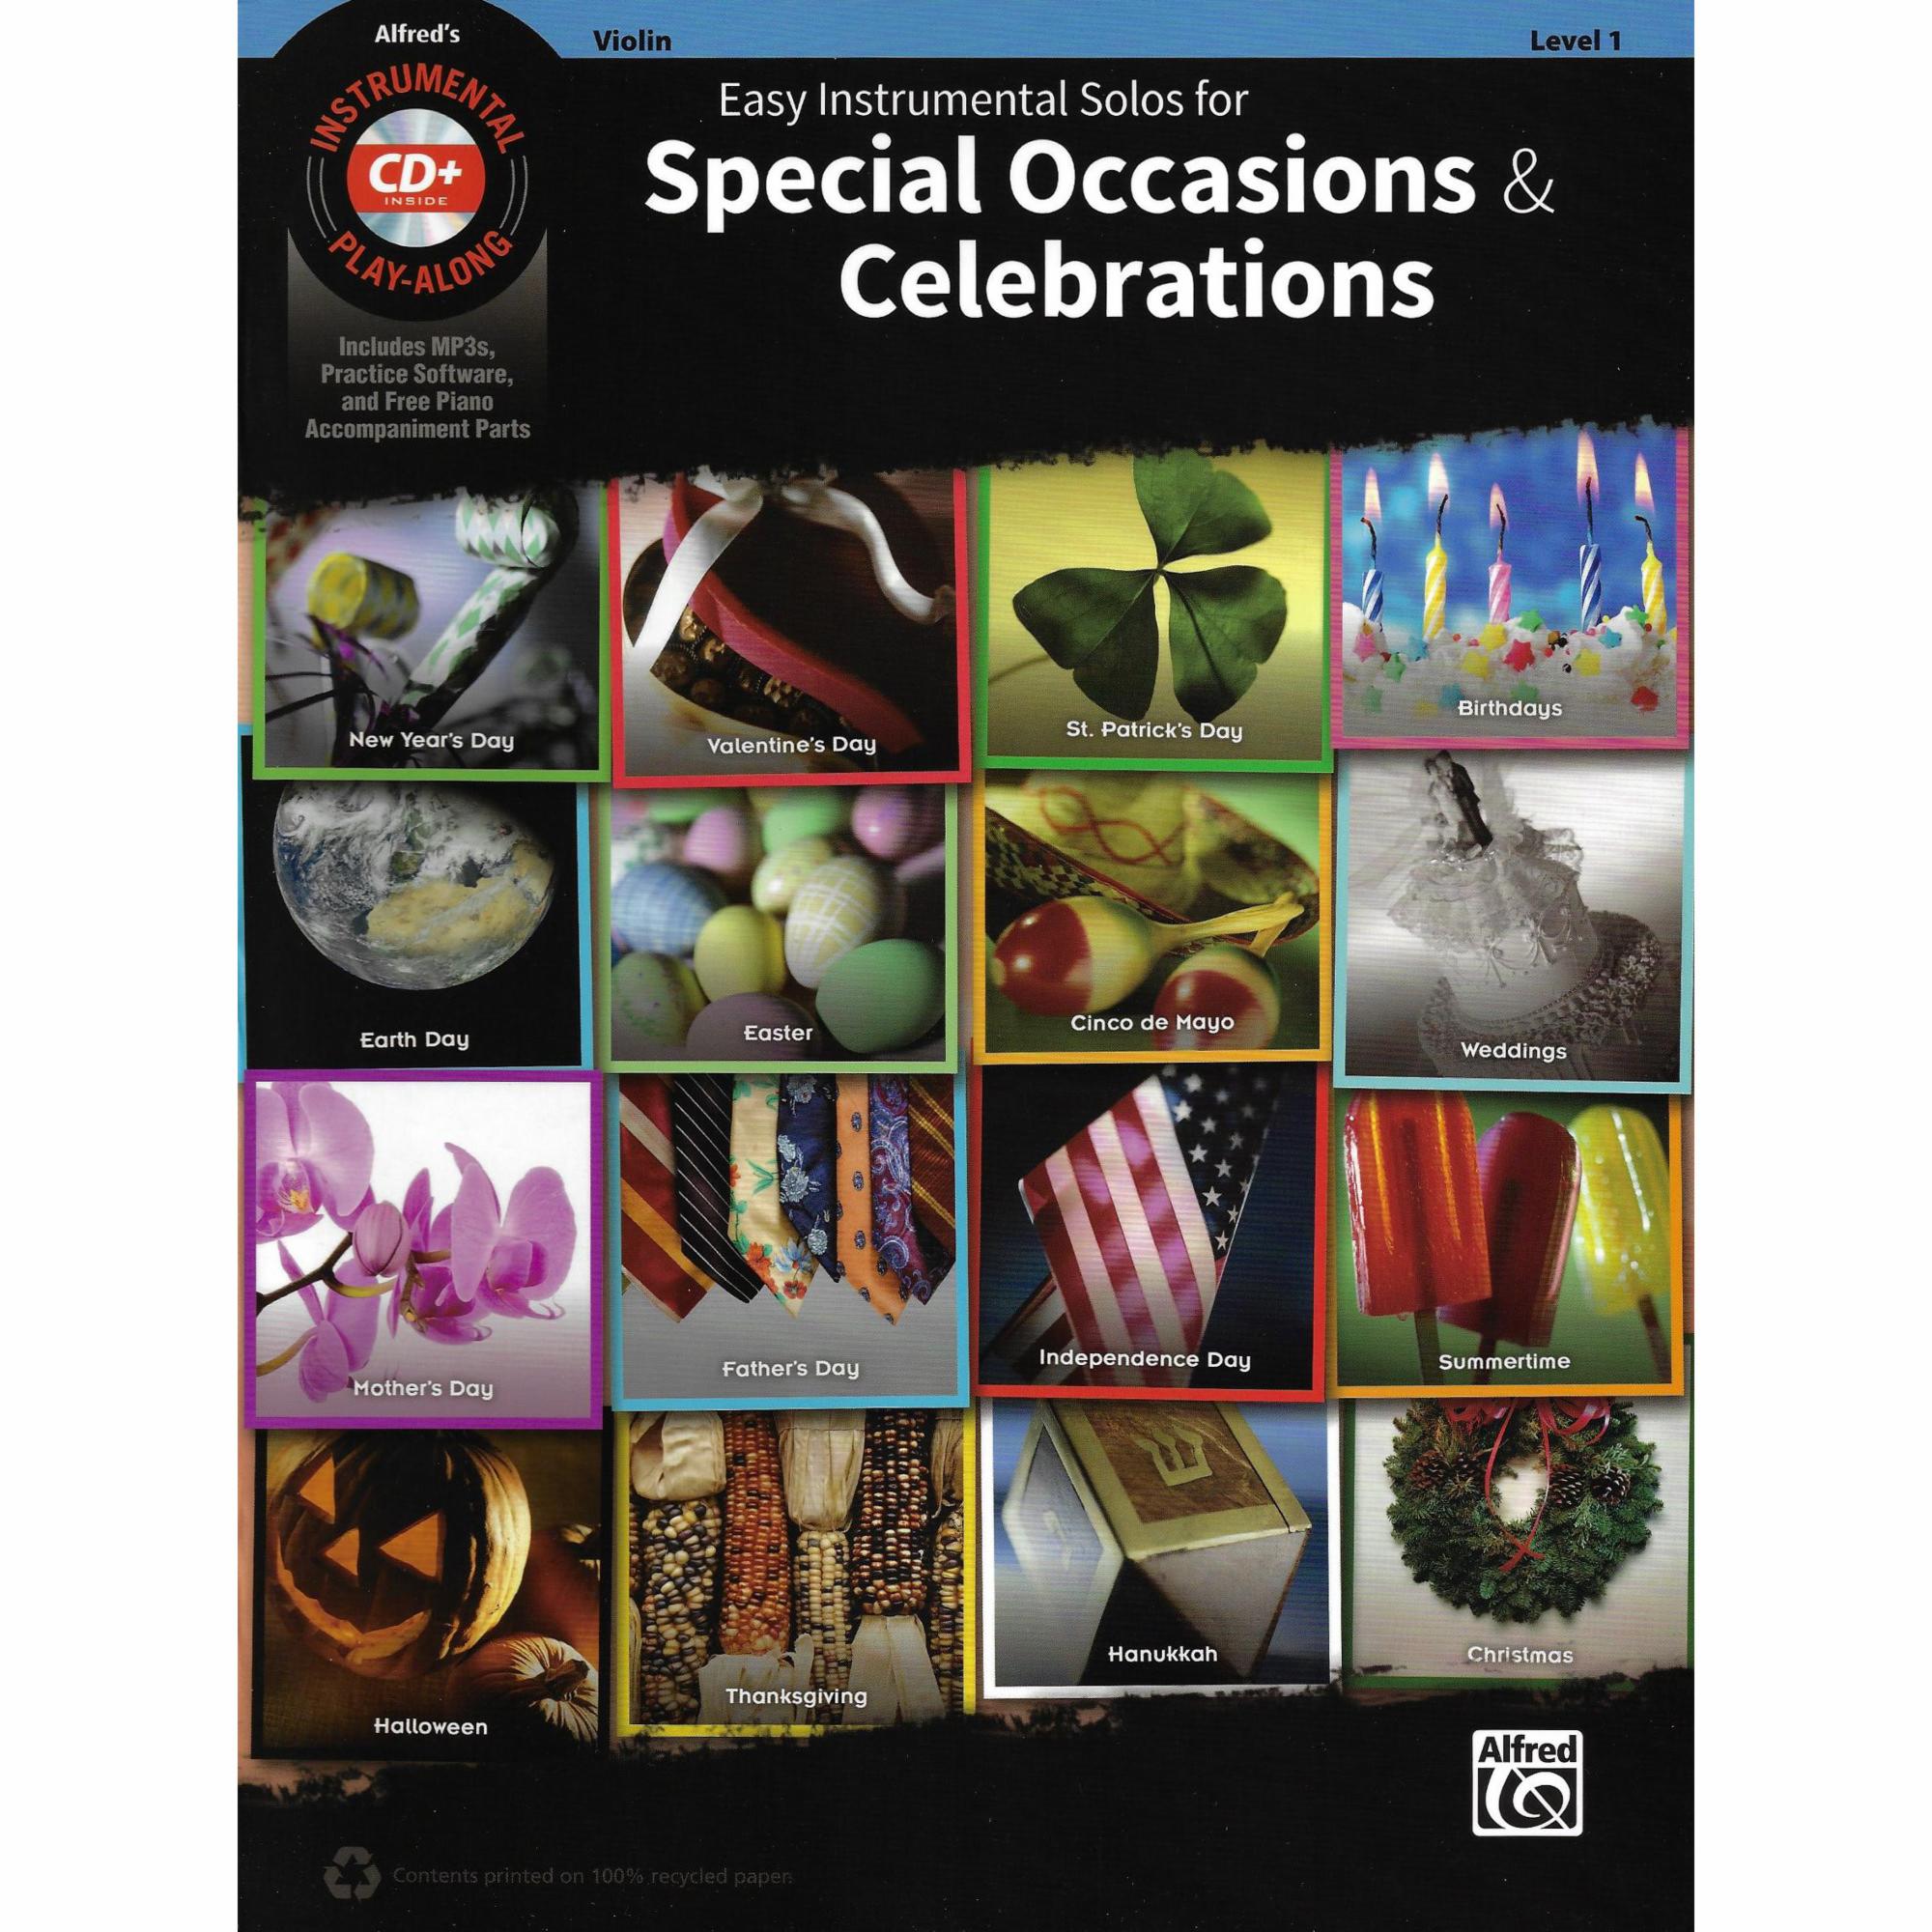 Special Occasions & Celebrations for Violin, Viola, or Cello